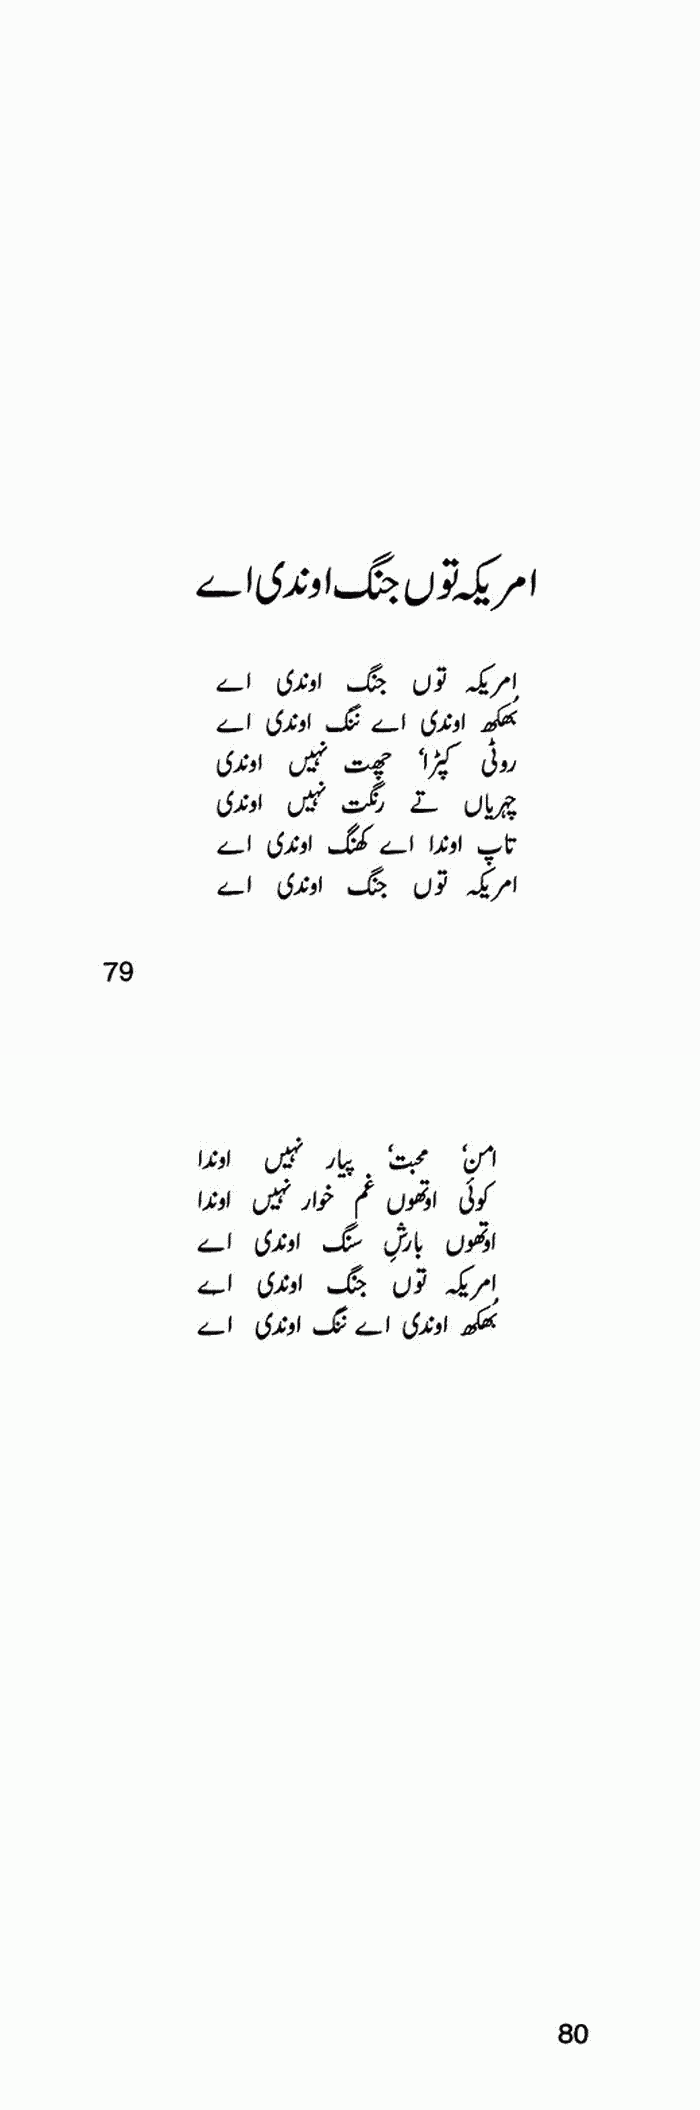 Amreeka ton jang aundi ay Habib Jalib